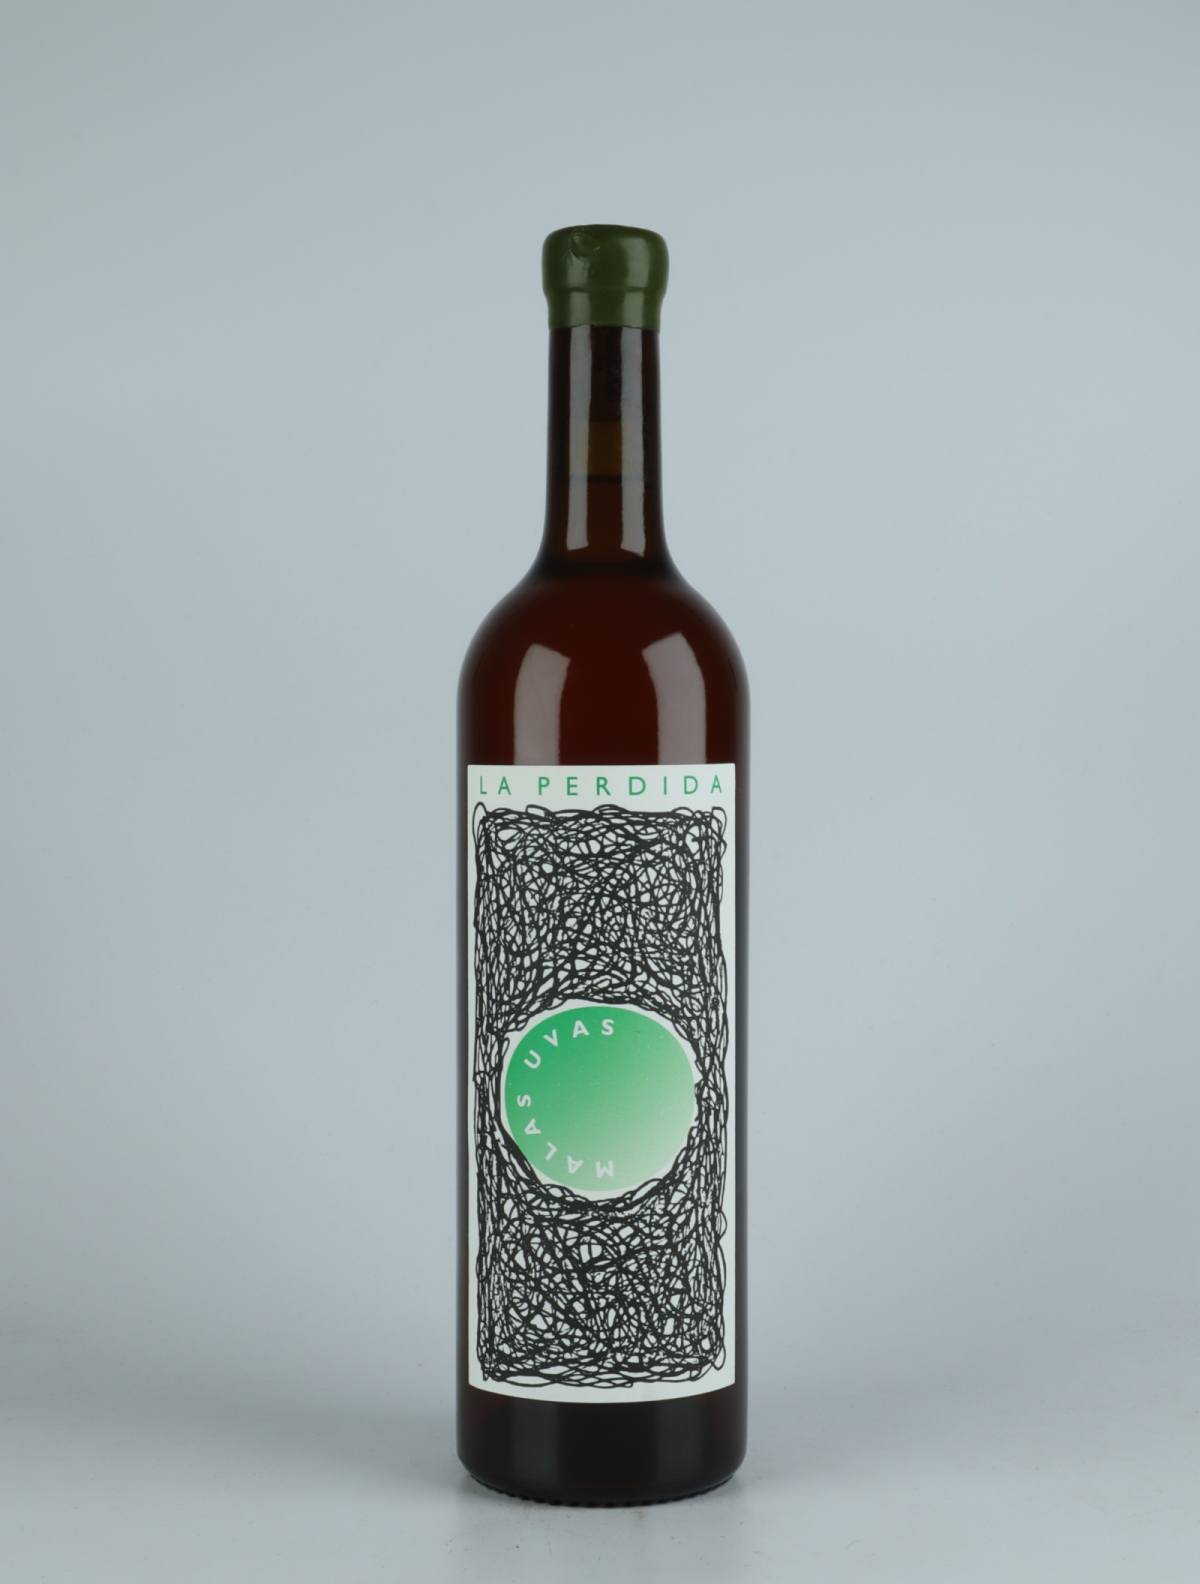 A bottle 2021 Malas Uvas White wine from La Perdida, Ribeira Sacra in Spain